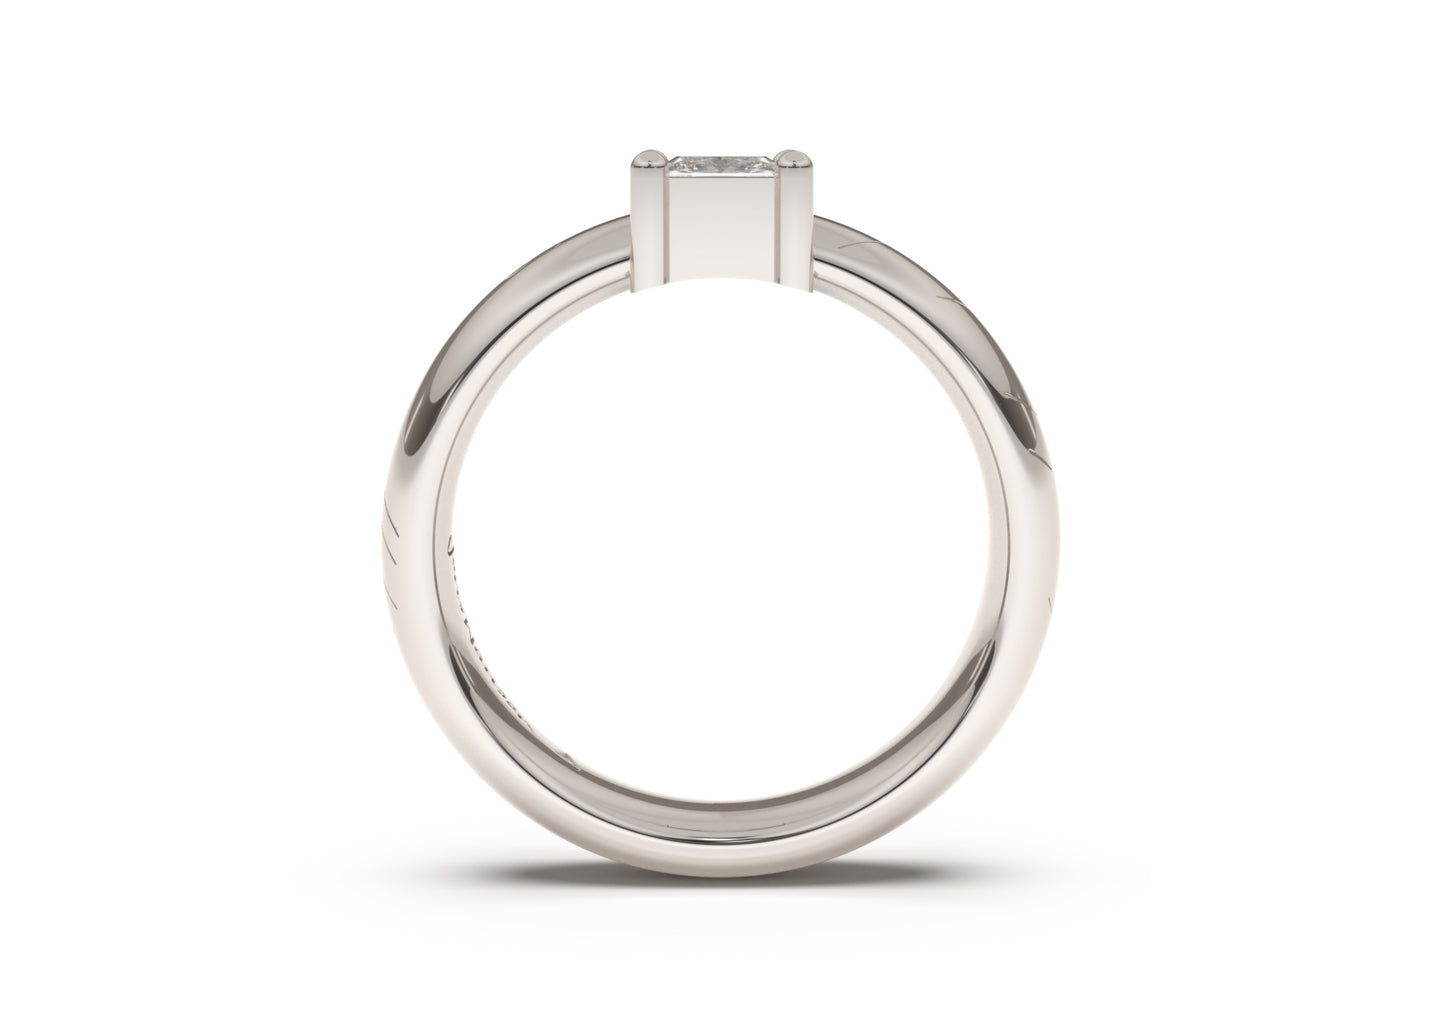 Princess Classic Elvish Engagement Ring, White Gold & Platinum